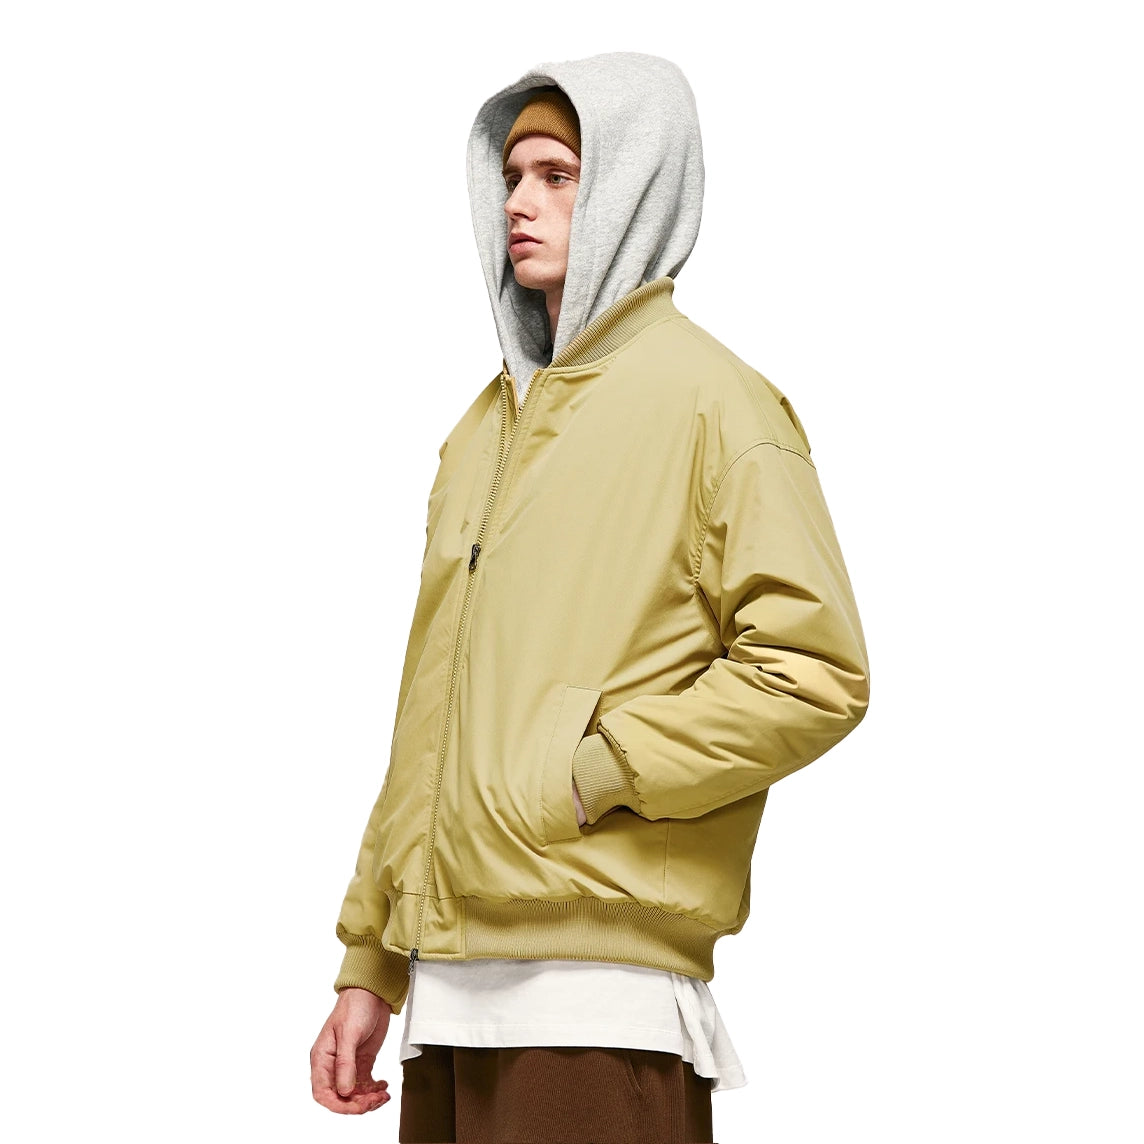 Detachable Hooded Bomber Coat - Chic Streetwear